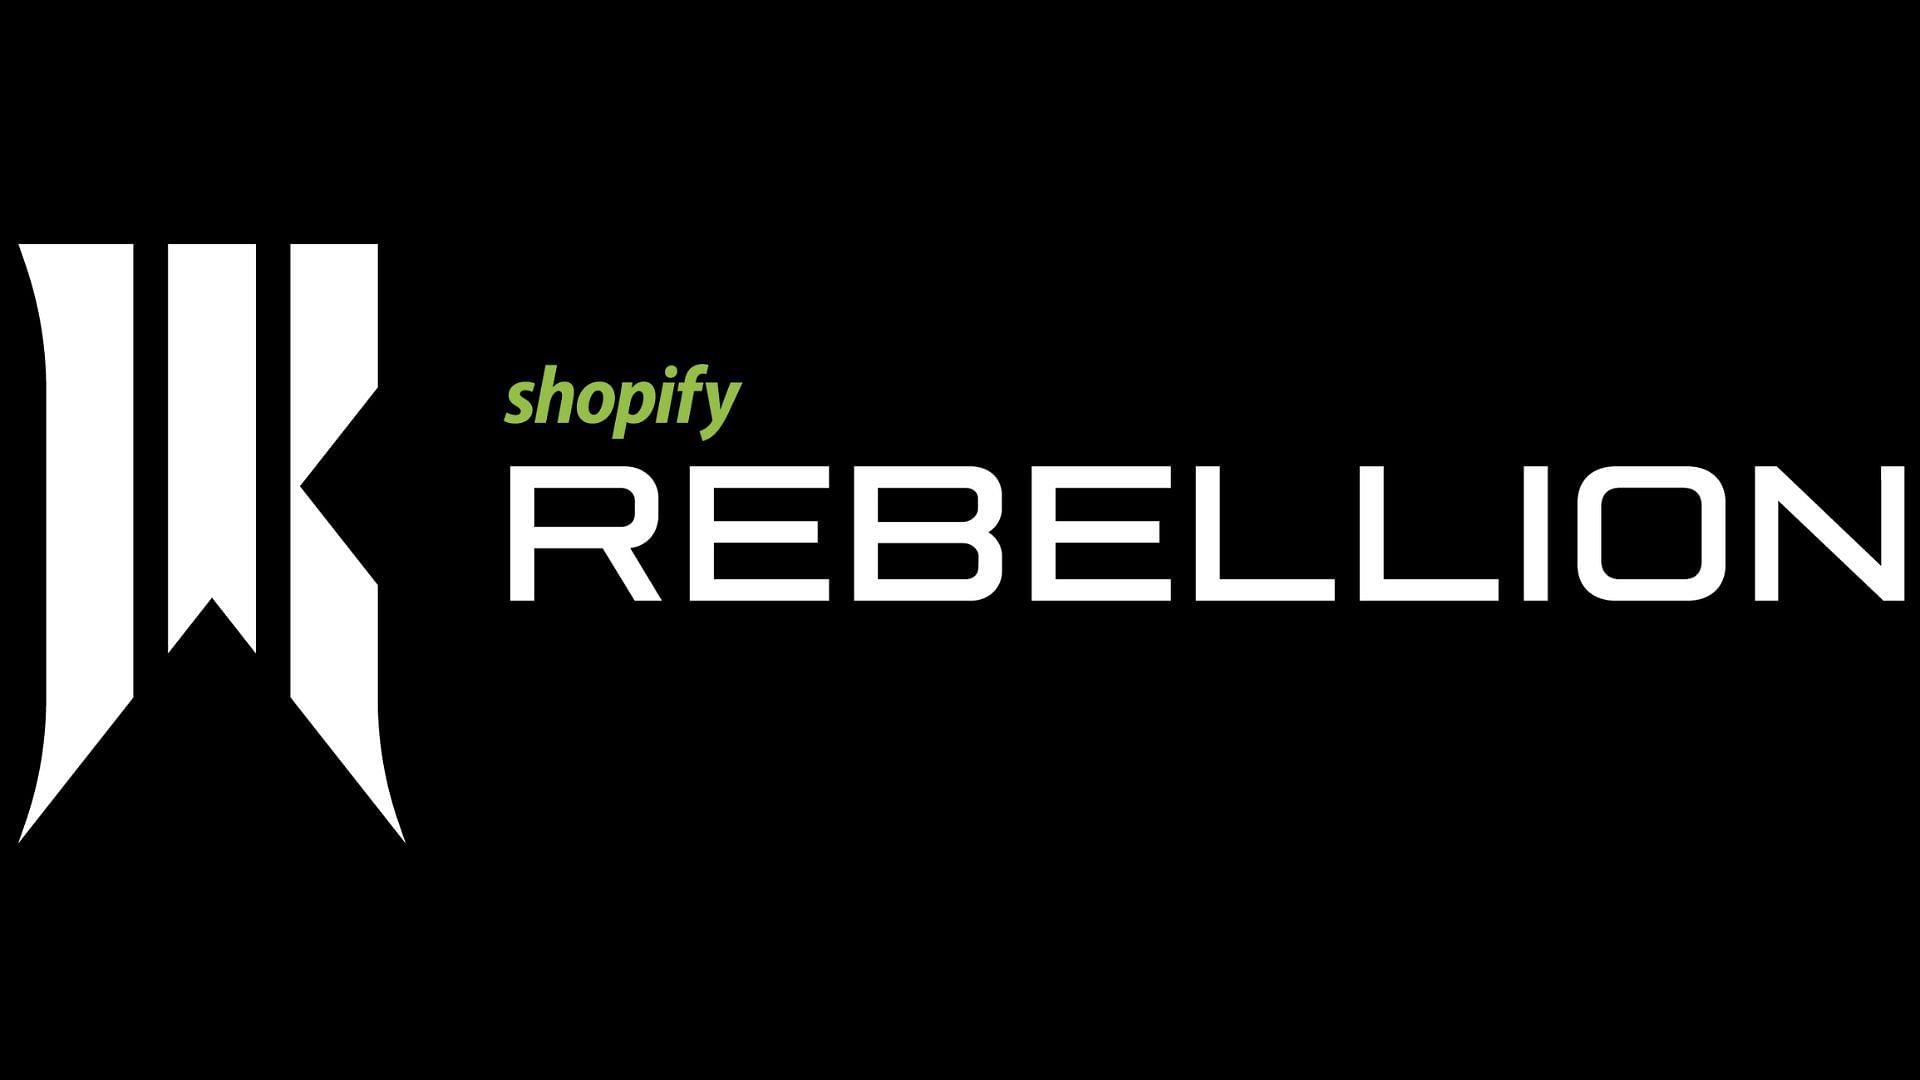 Shopify Rebellion&#039;s team logo (Image via Liquipedia)